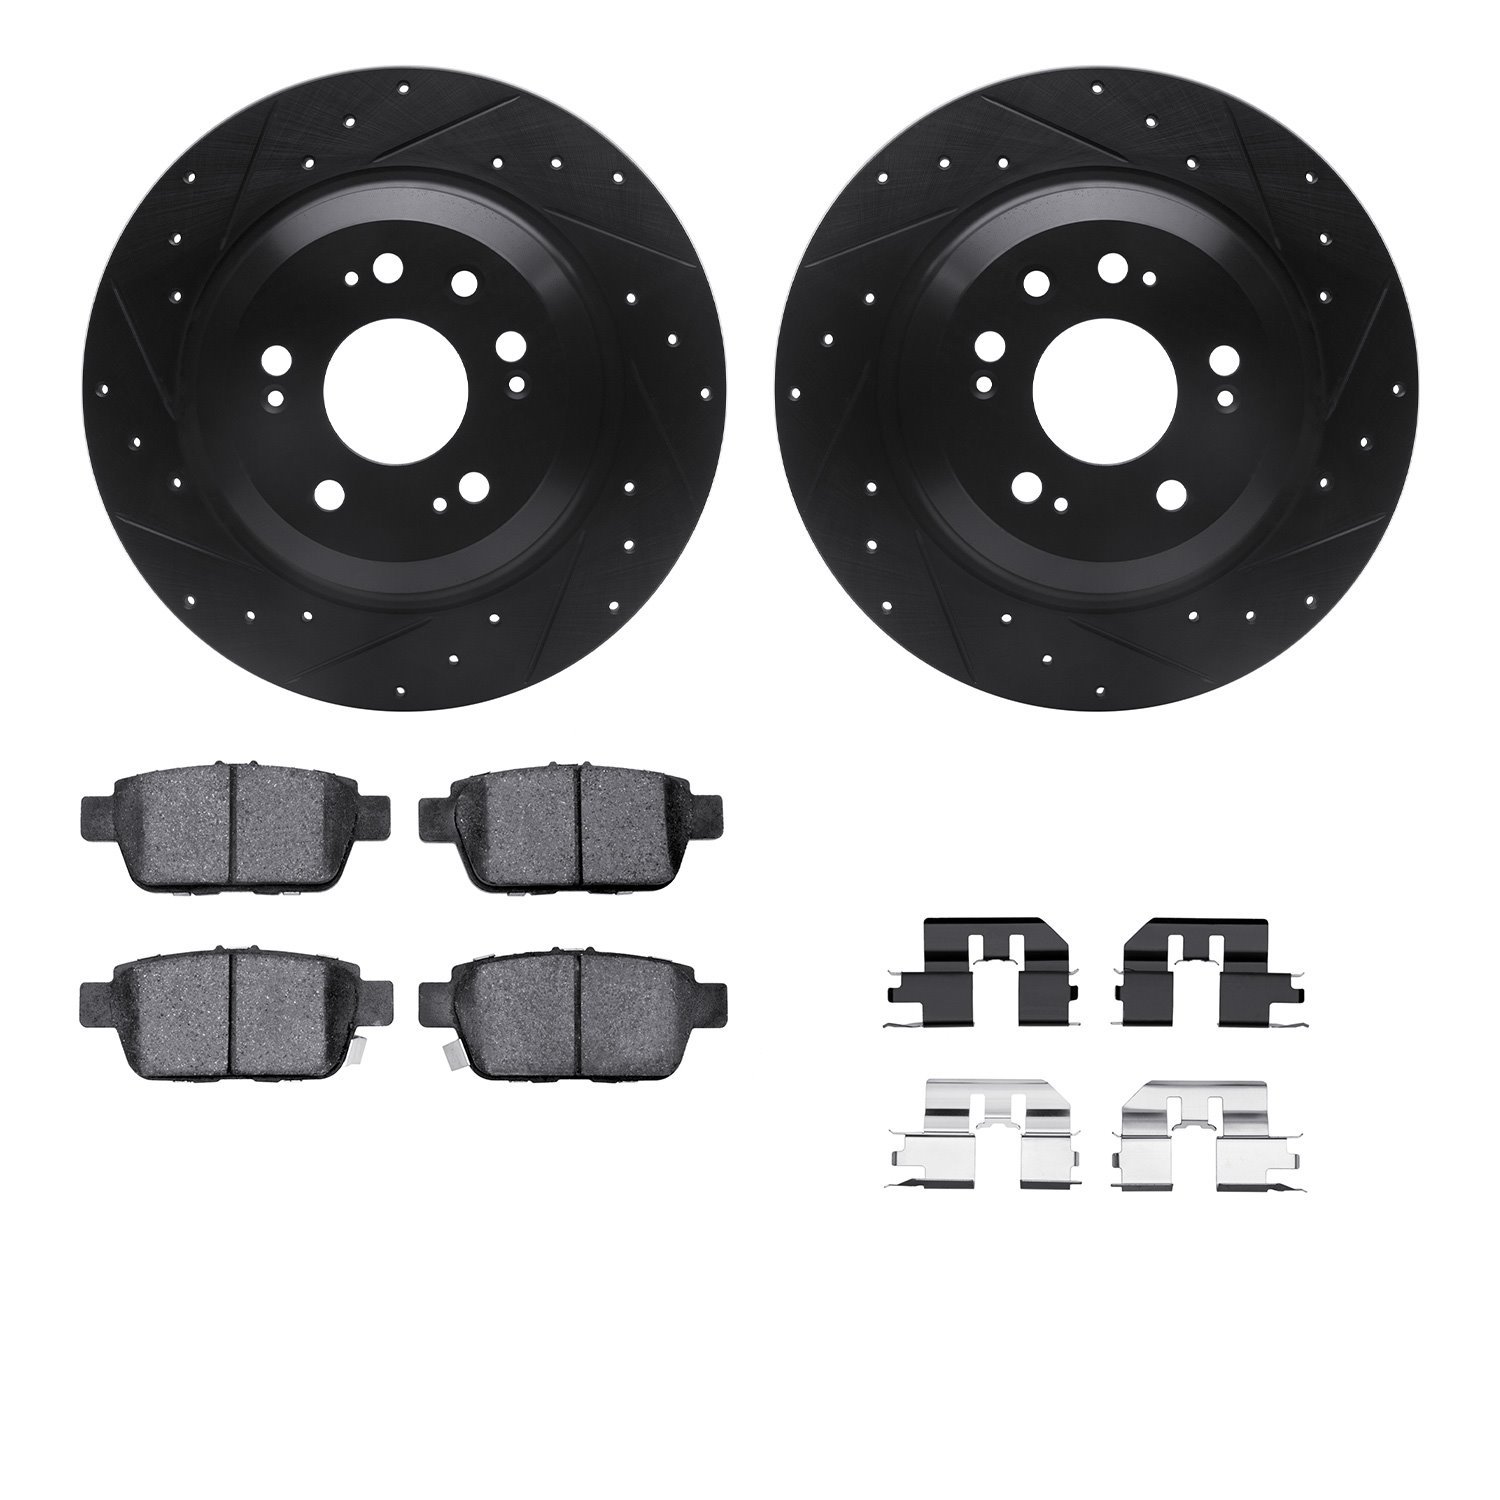 8312-58022 Drilled/Slotted Brake Rotors with 3000-Series Ceramic Brake Pads Kit & Hardware [Black], 2009-2014 Acura/Honda, Posit